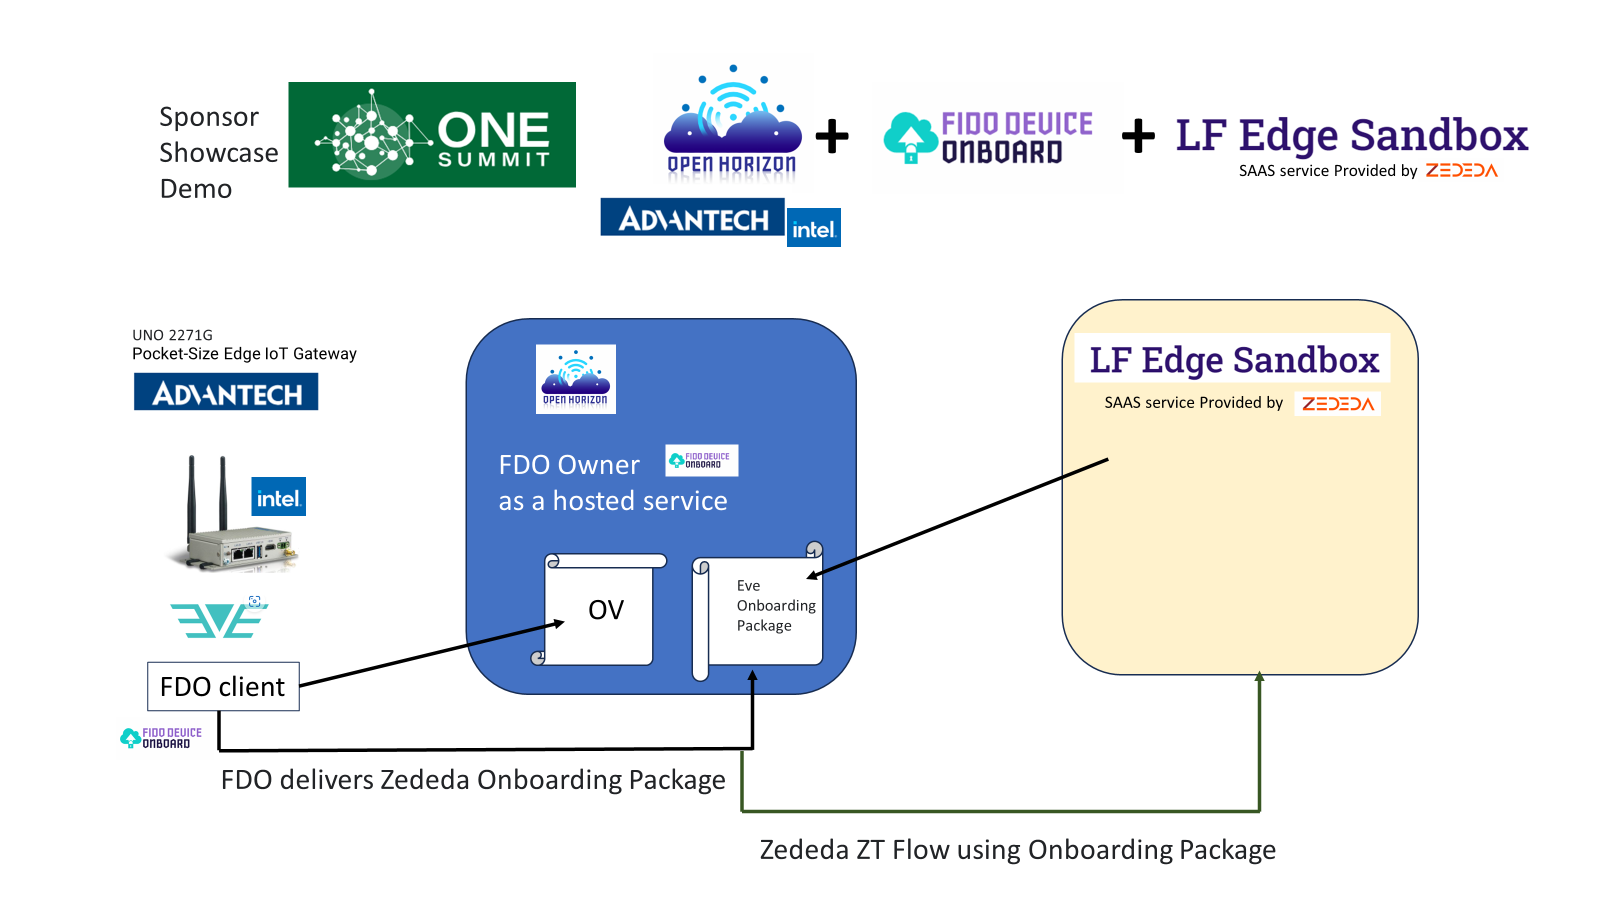 FIDO Device Onboard solution diagram